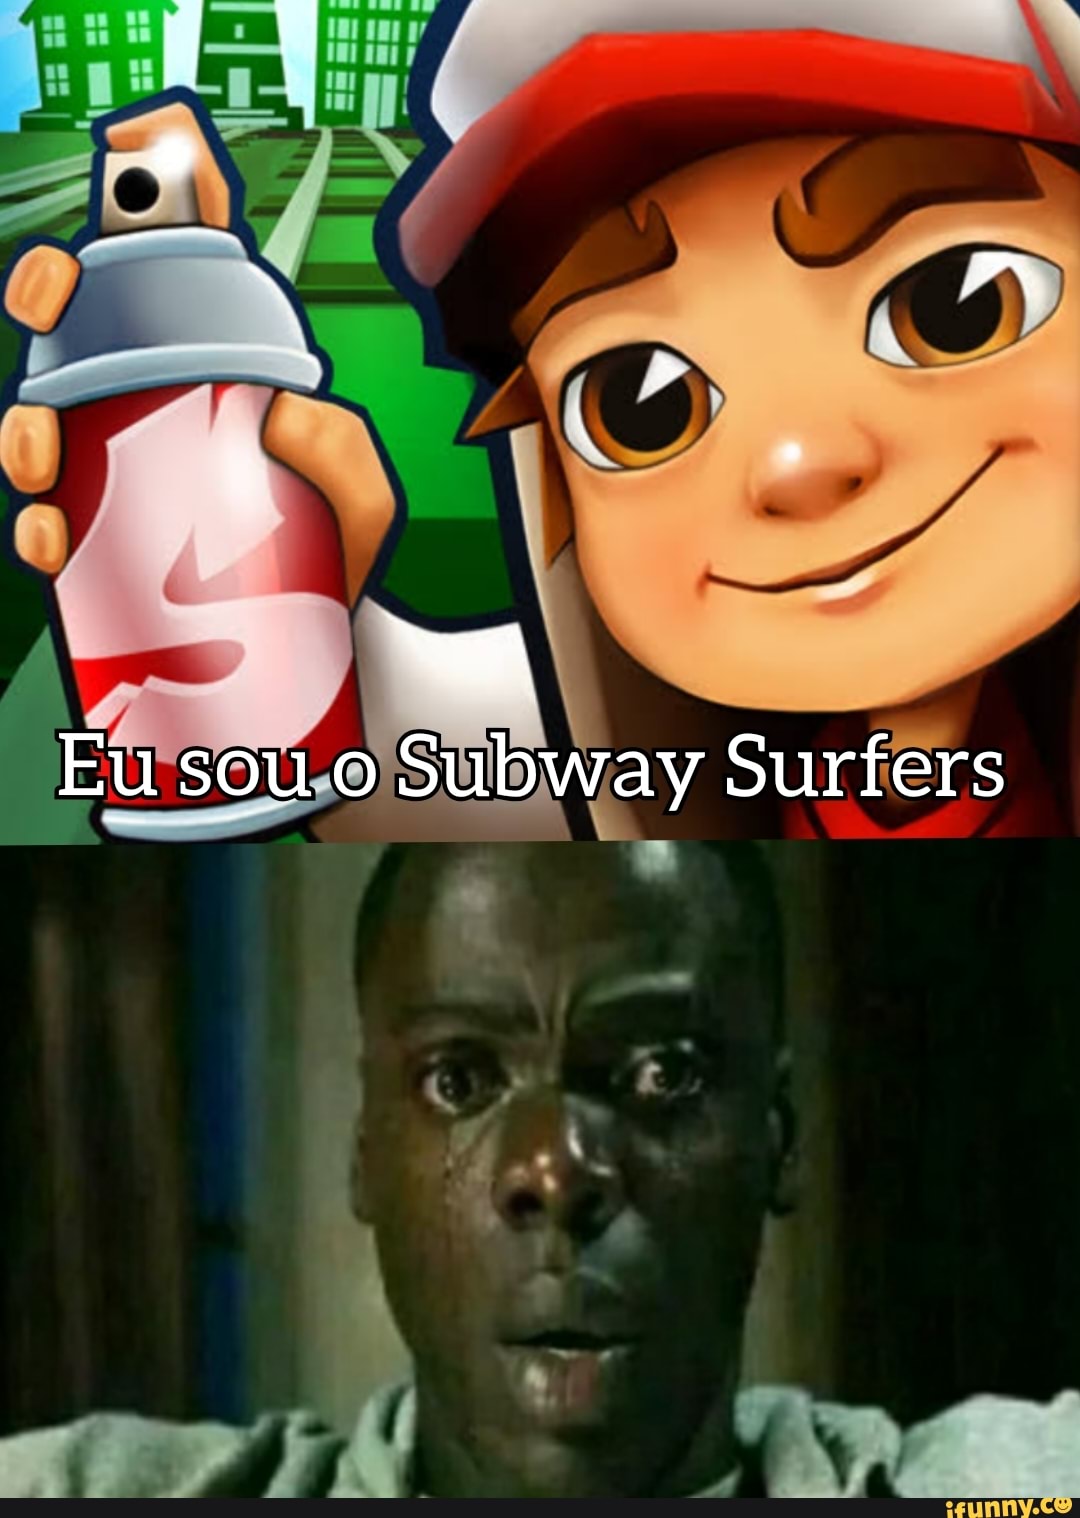 Eu sou Subway Surfers - iFunny Brazil